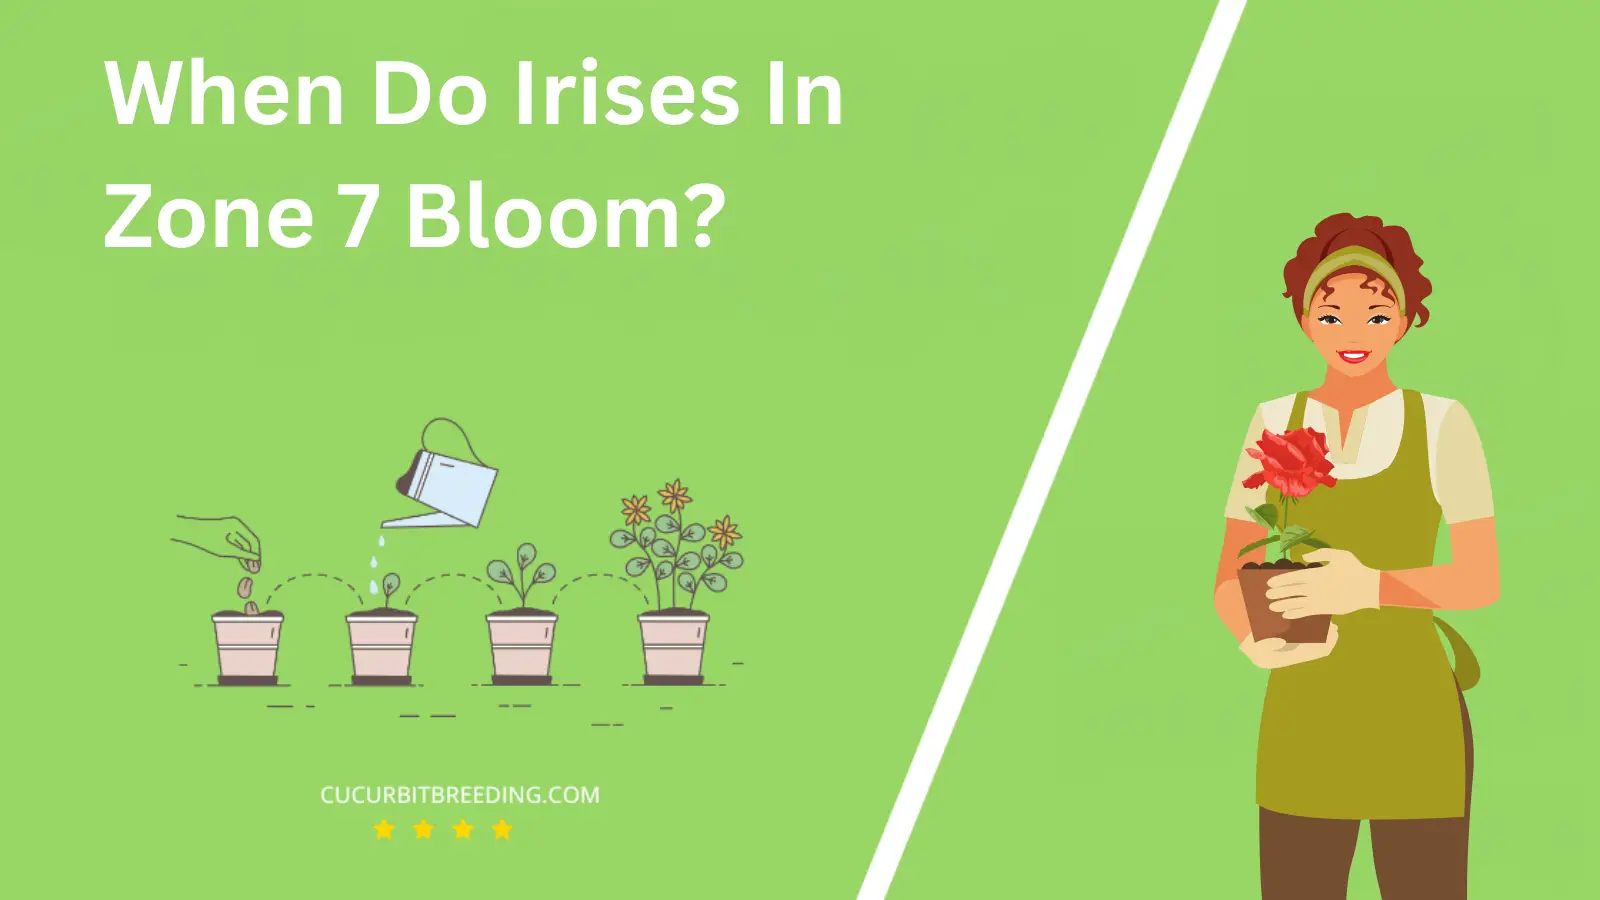 When Do Irises In Zone 7 Bloom?